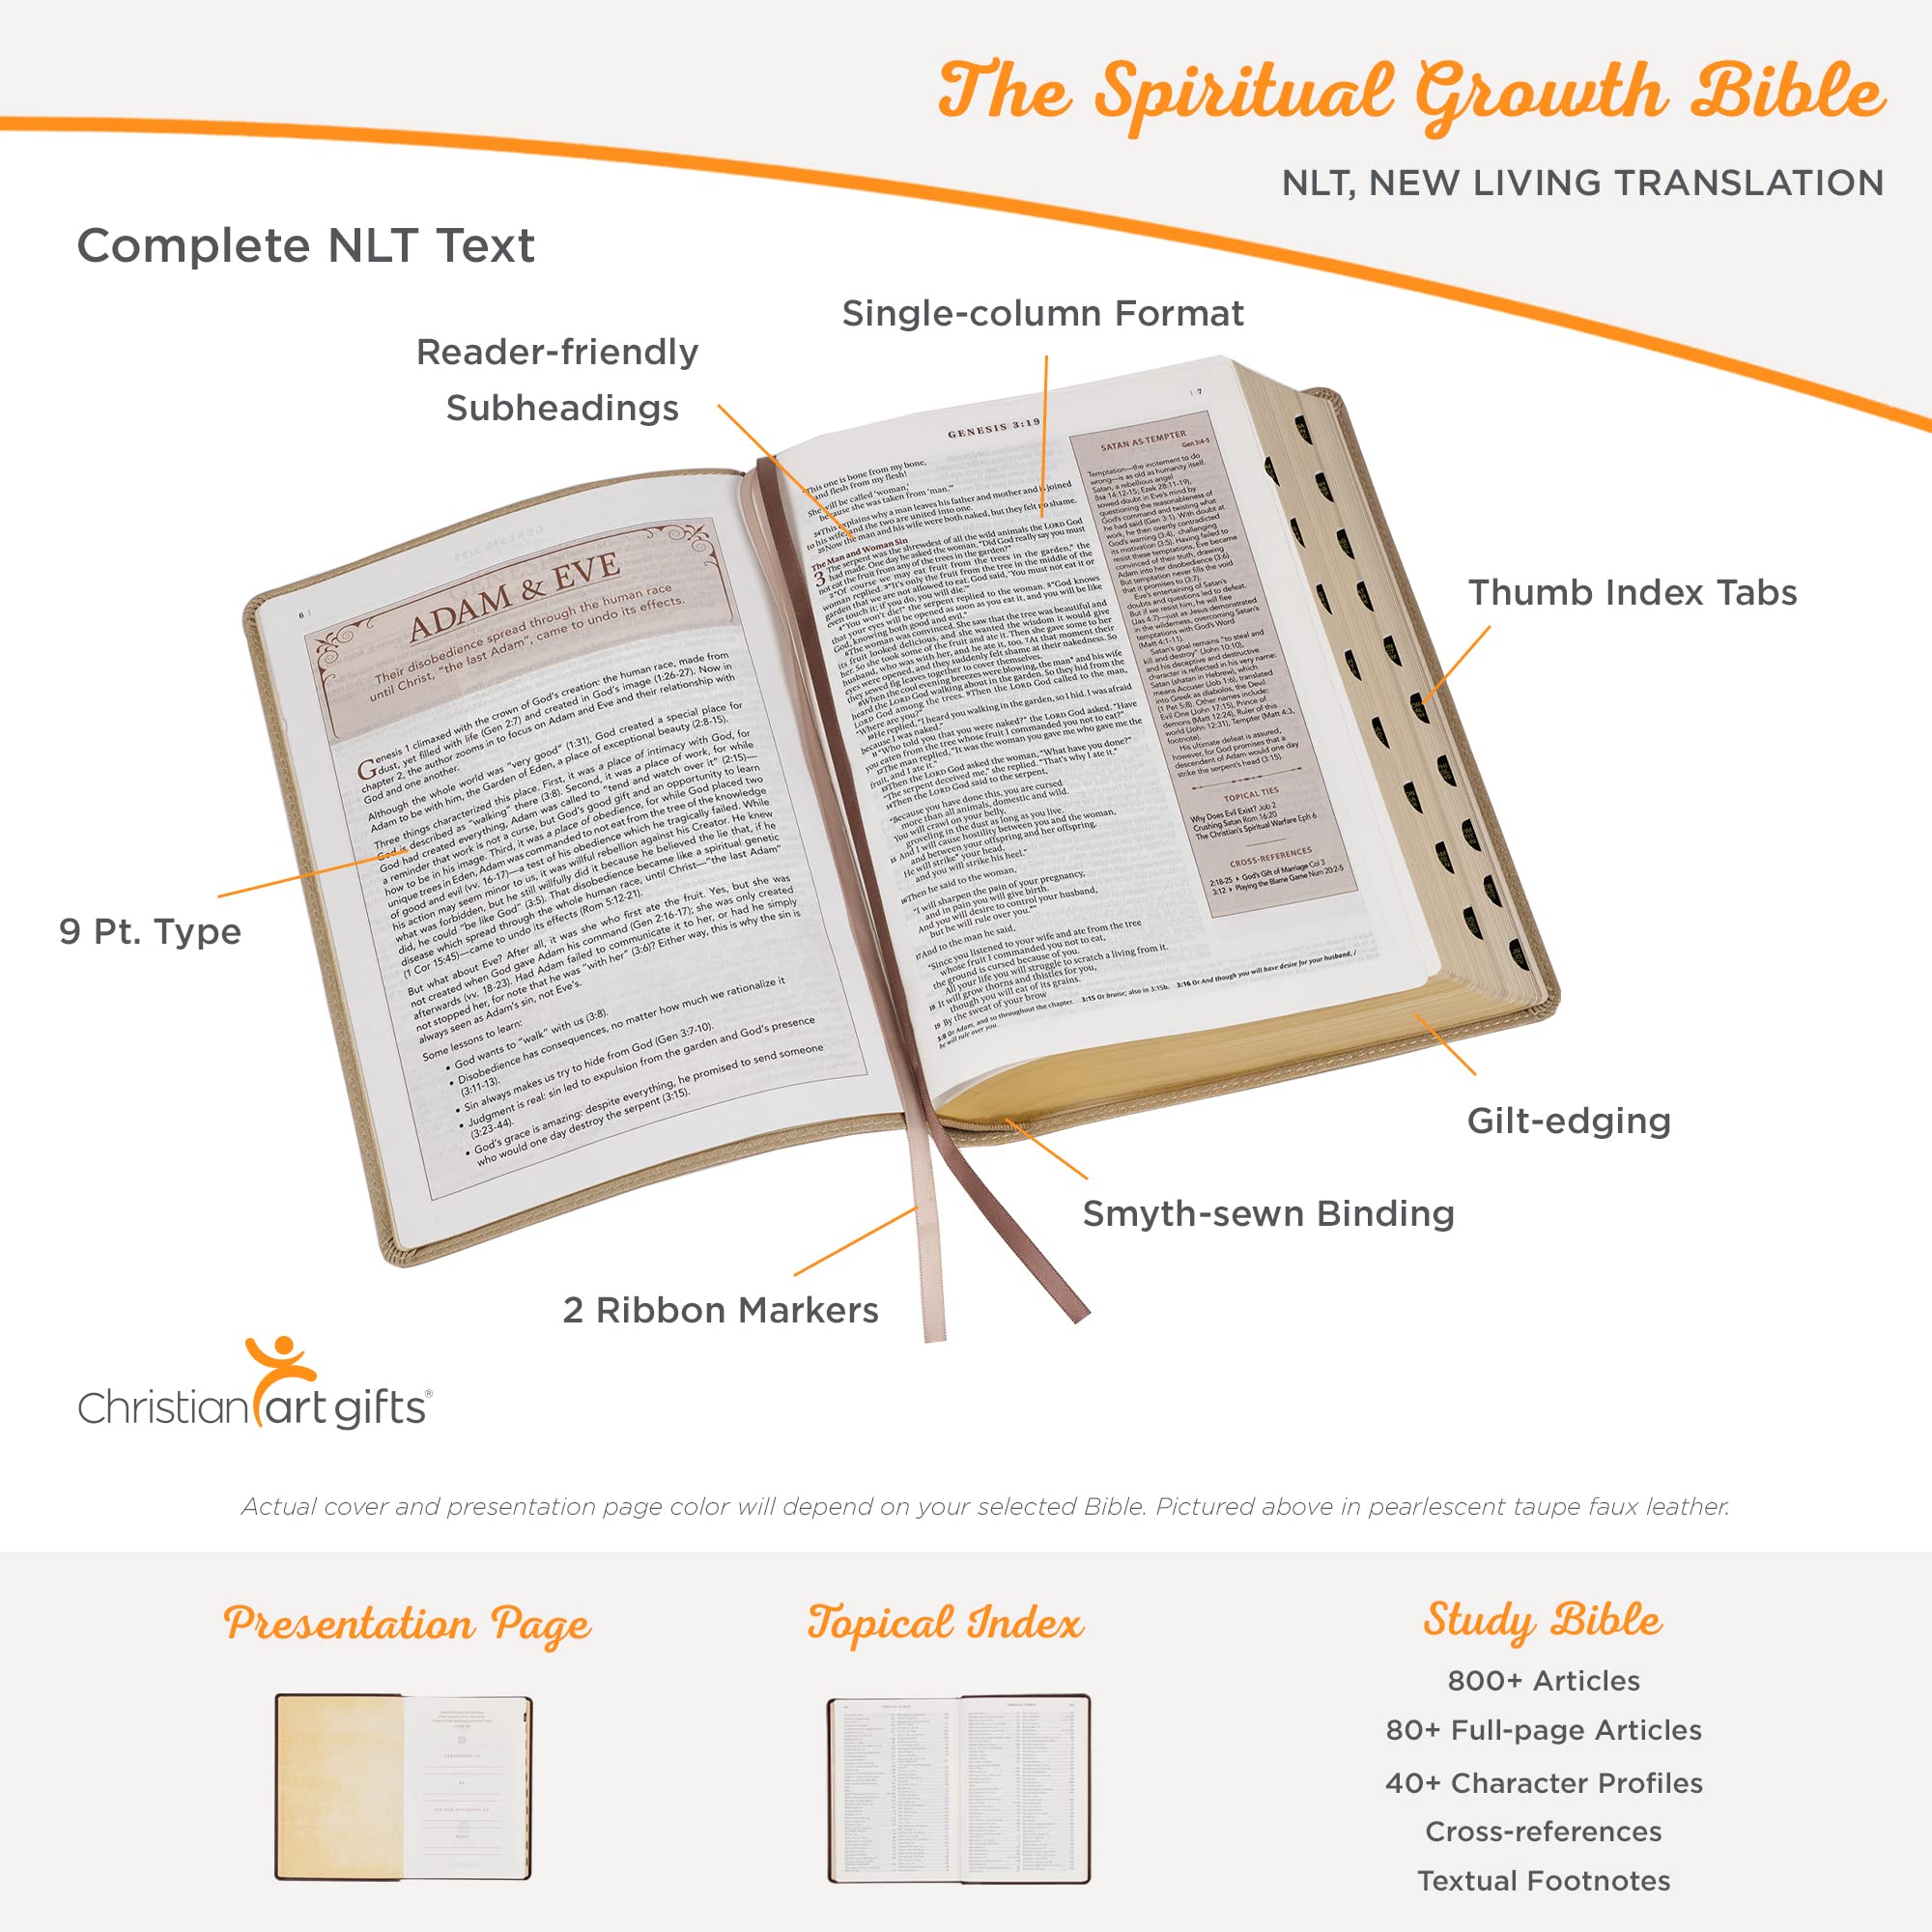 The Spiritual Growth Bible, Study Bible, NLT - New Living Translation Holy Bible, Hardcover, Teal